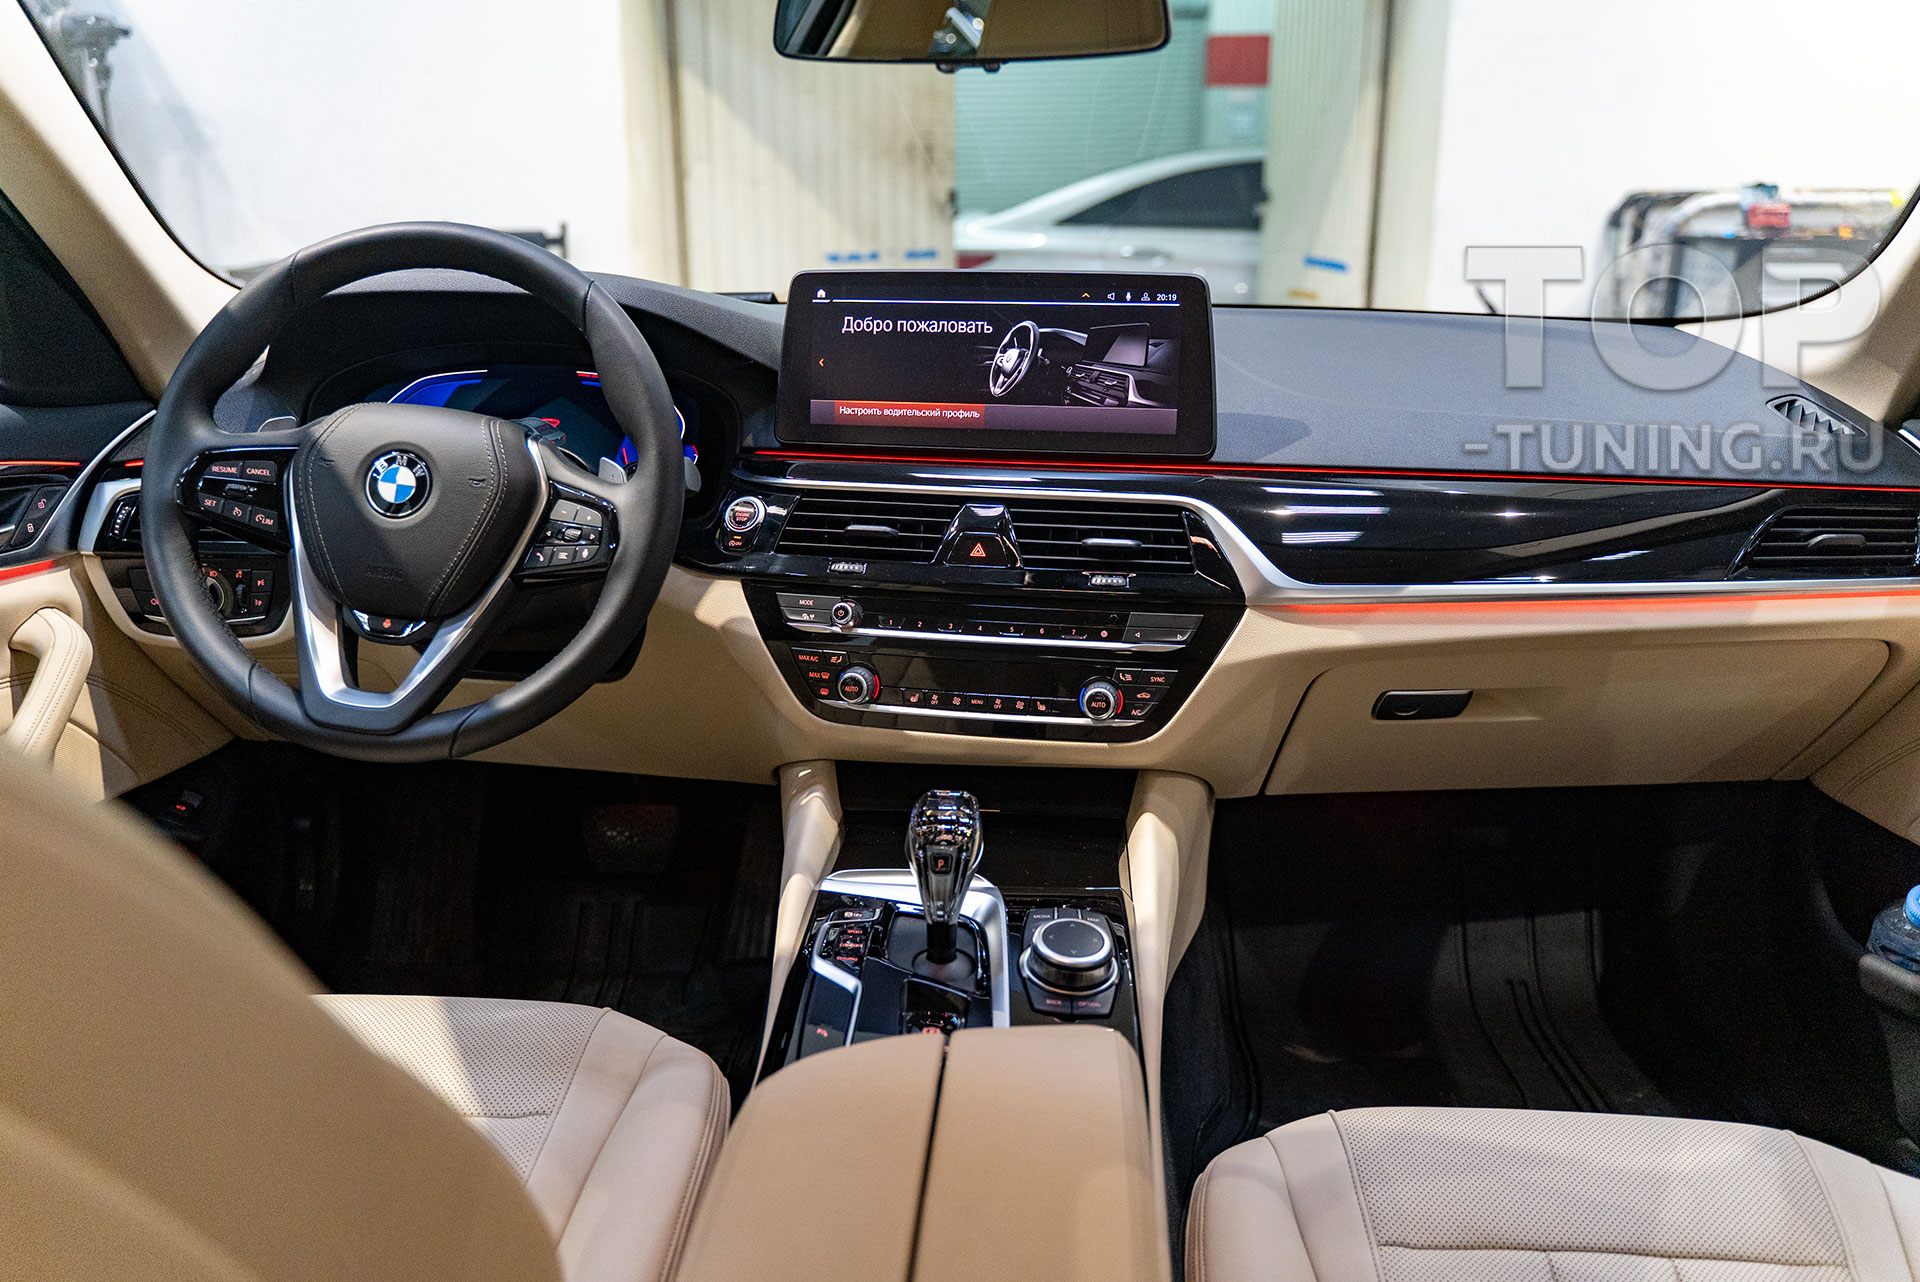 М-Хрусталь  в салон BMW 5 серии G30 3 в 1 – установка под ключ